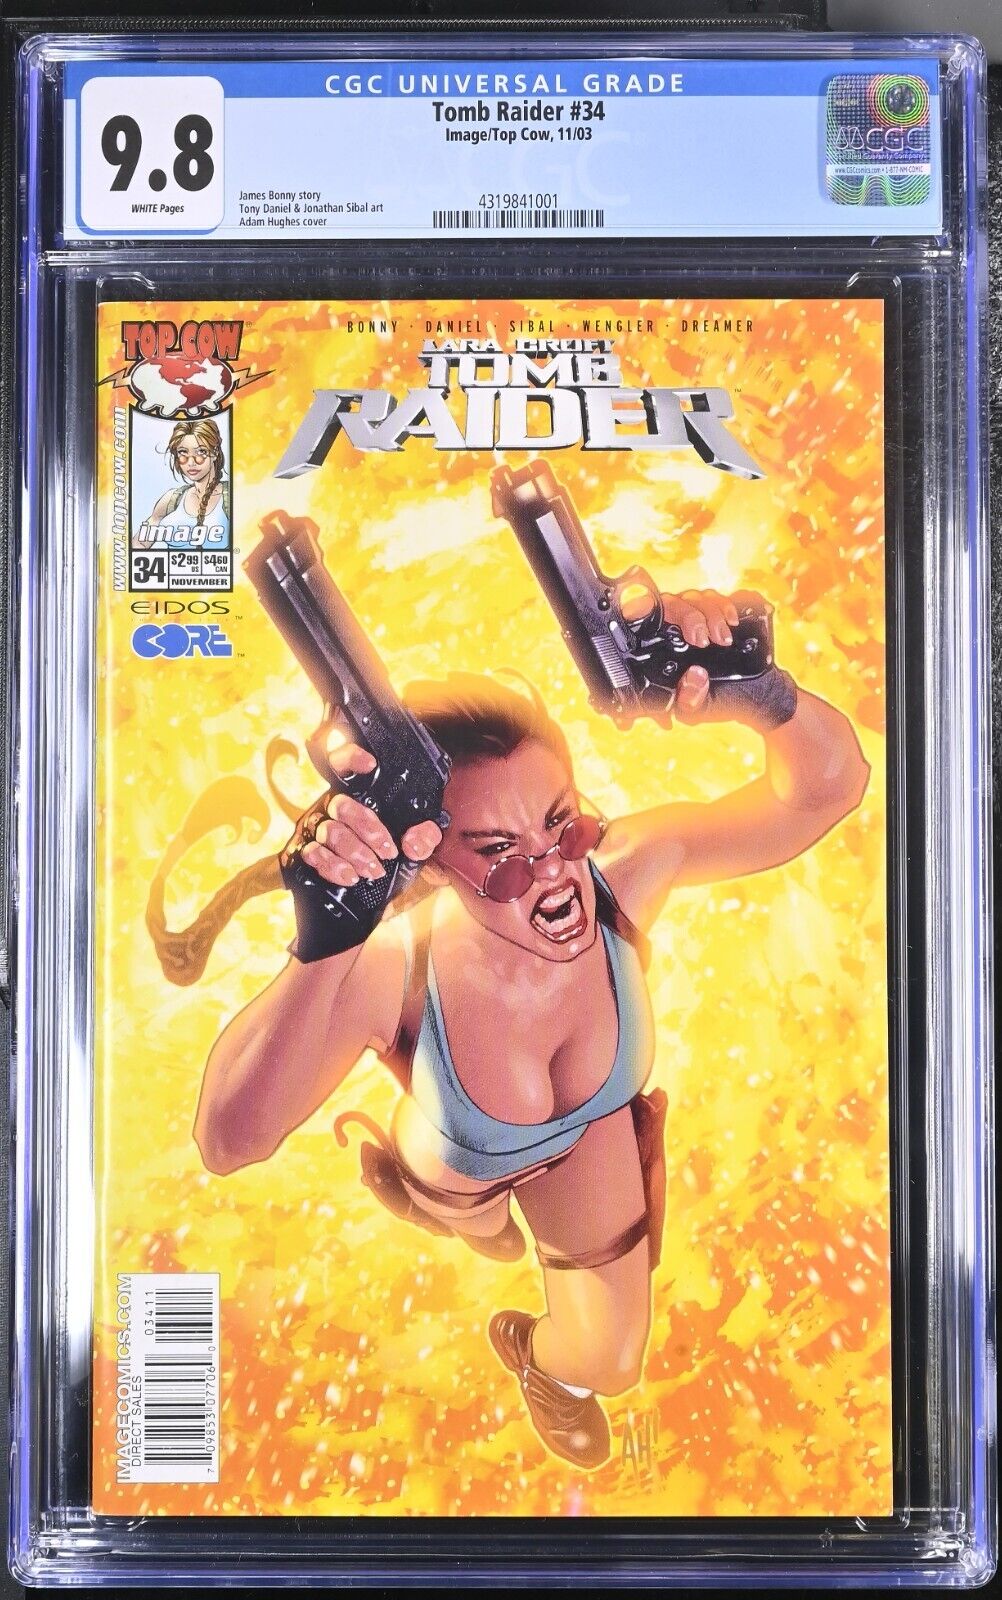 Tomb Raider #34 CGC 9.8 Adam Hughes Cover Bad Girl Good Girl Art 2003 Top Cow